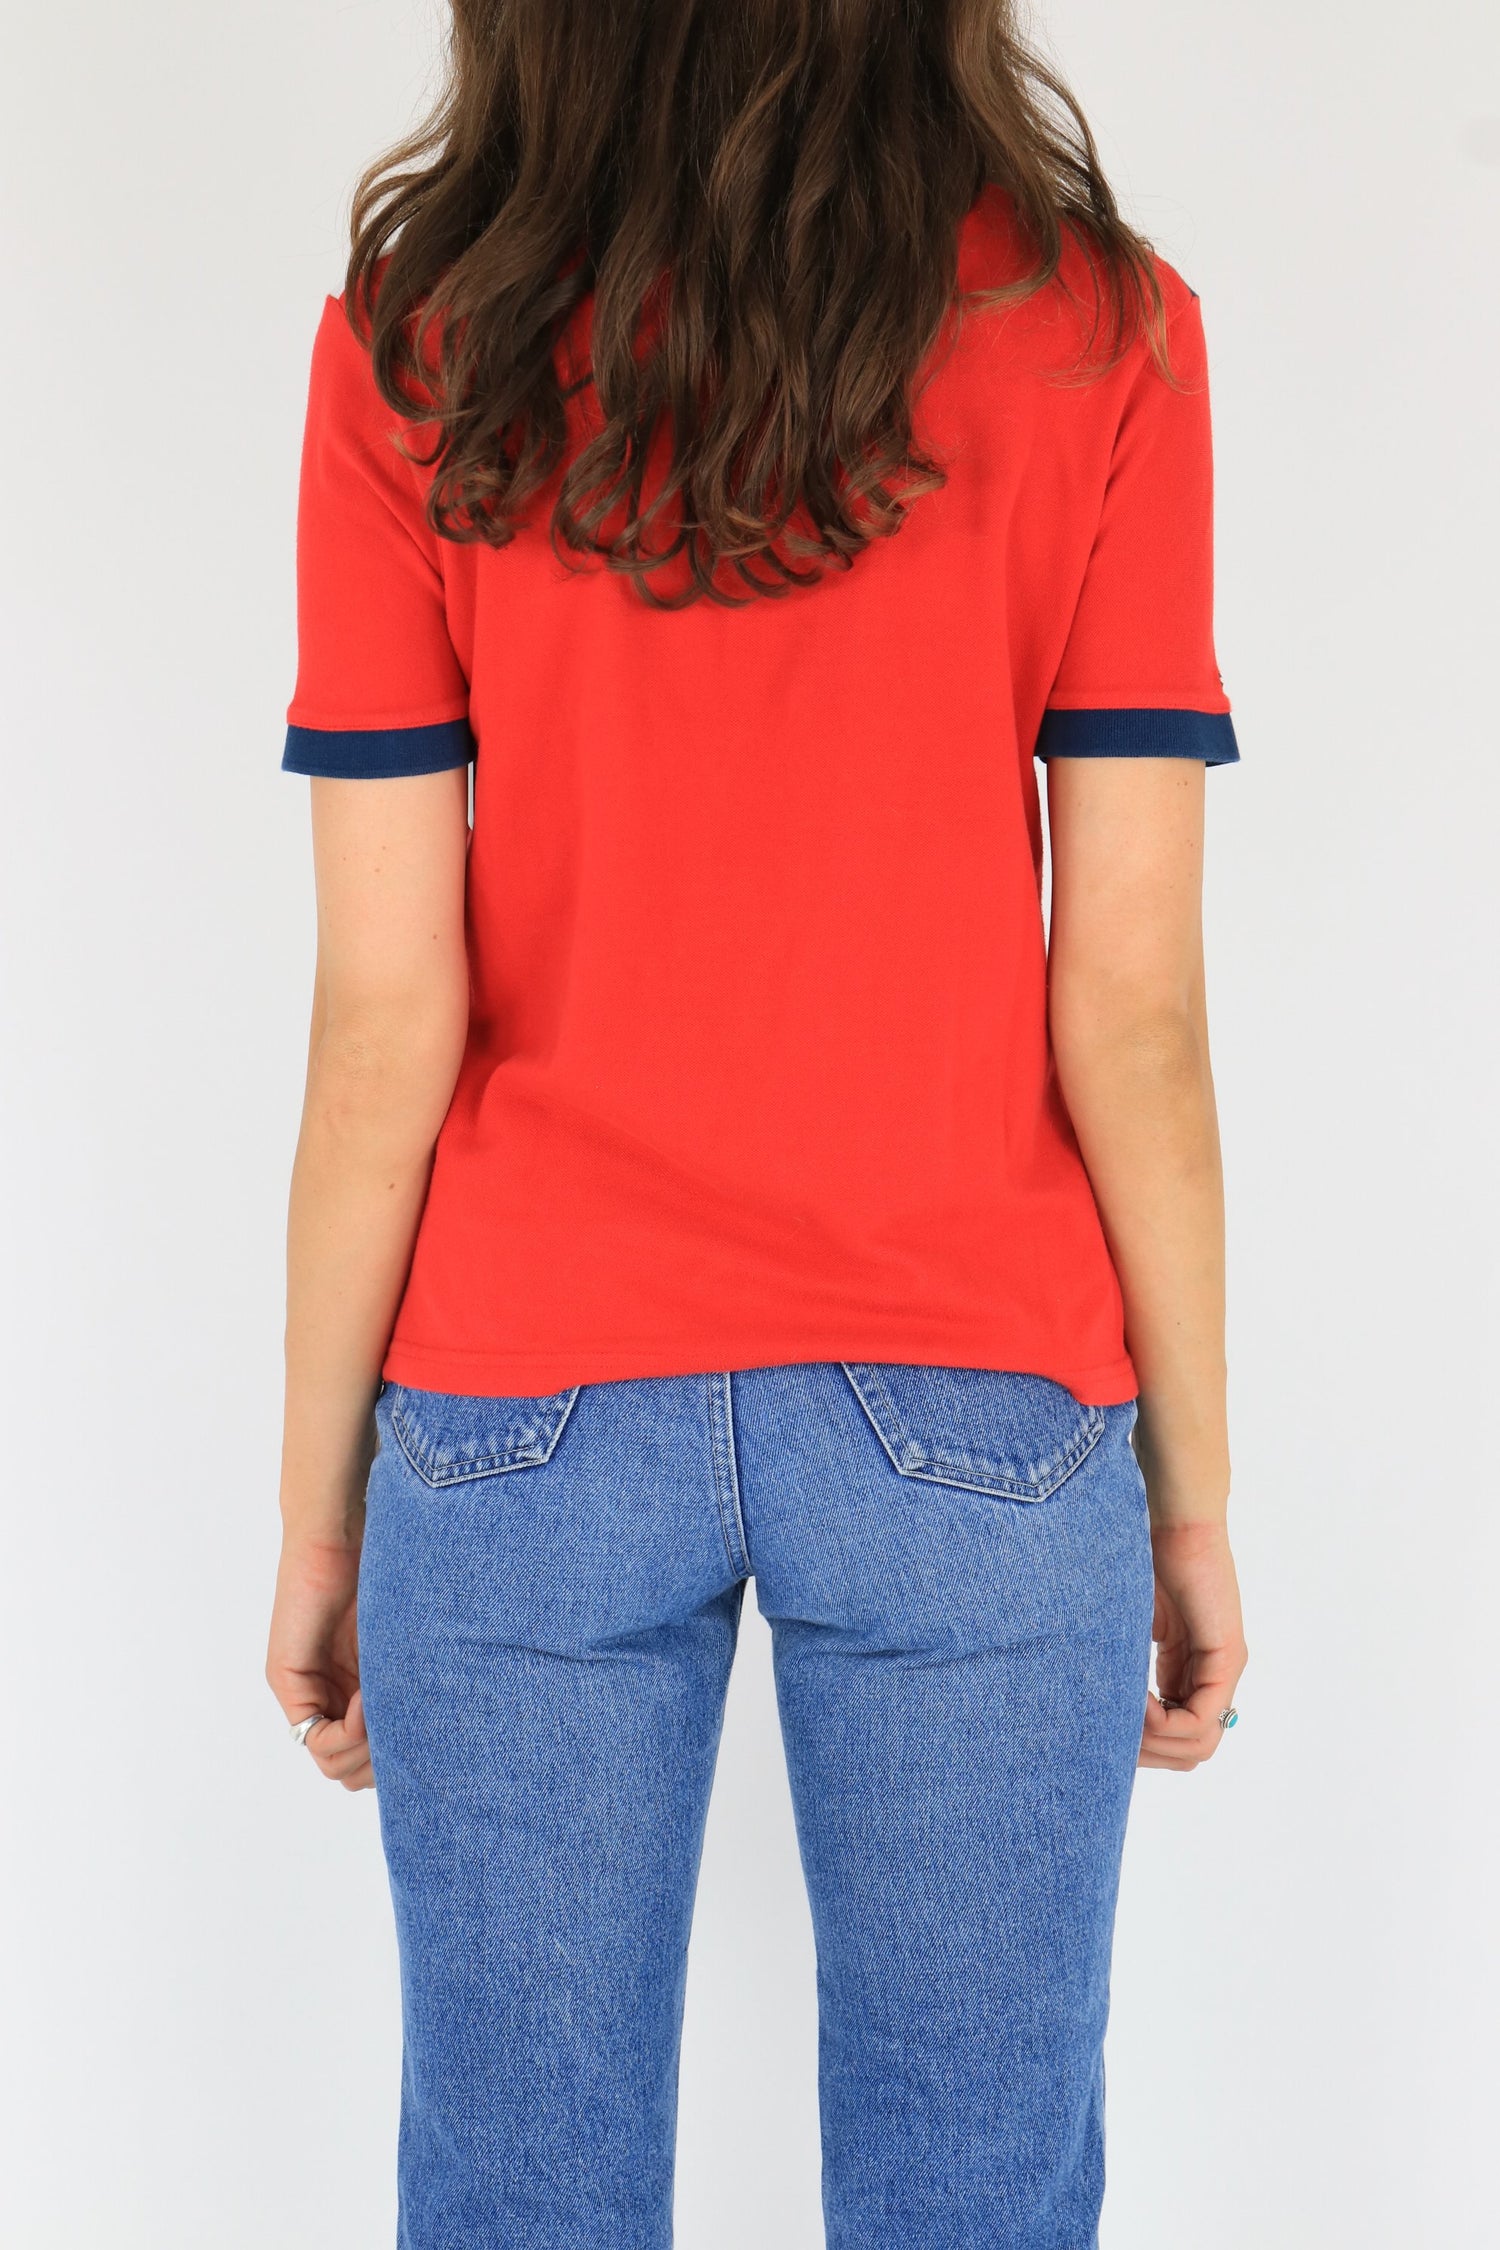 Tommy Hilfiger Polo Shirt Red/Blue/White Medium